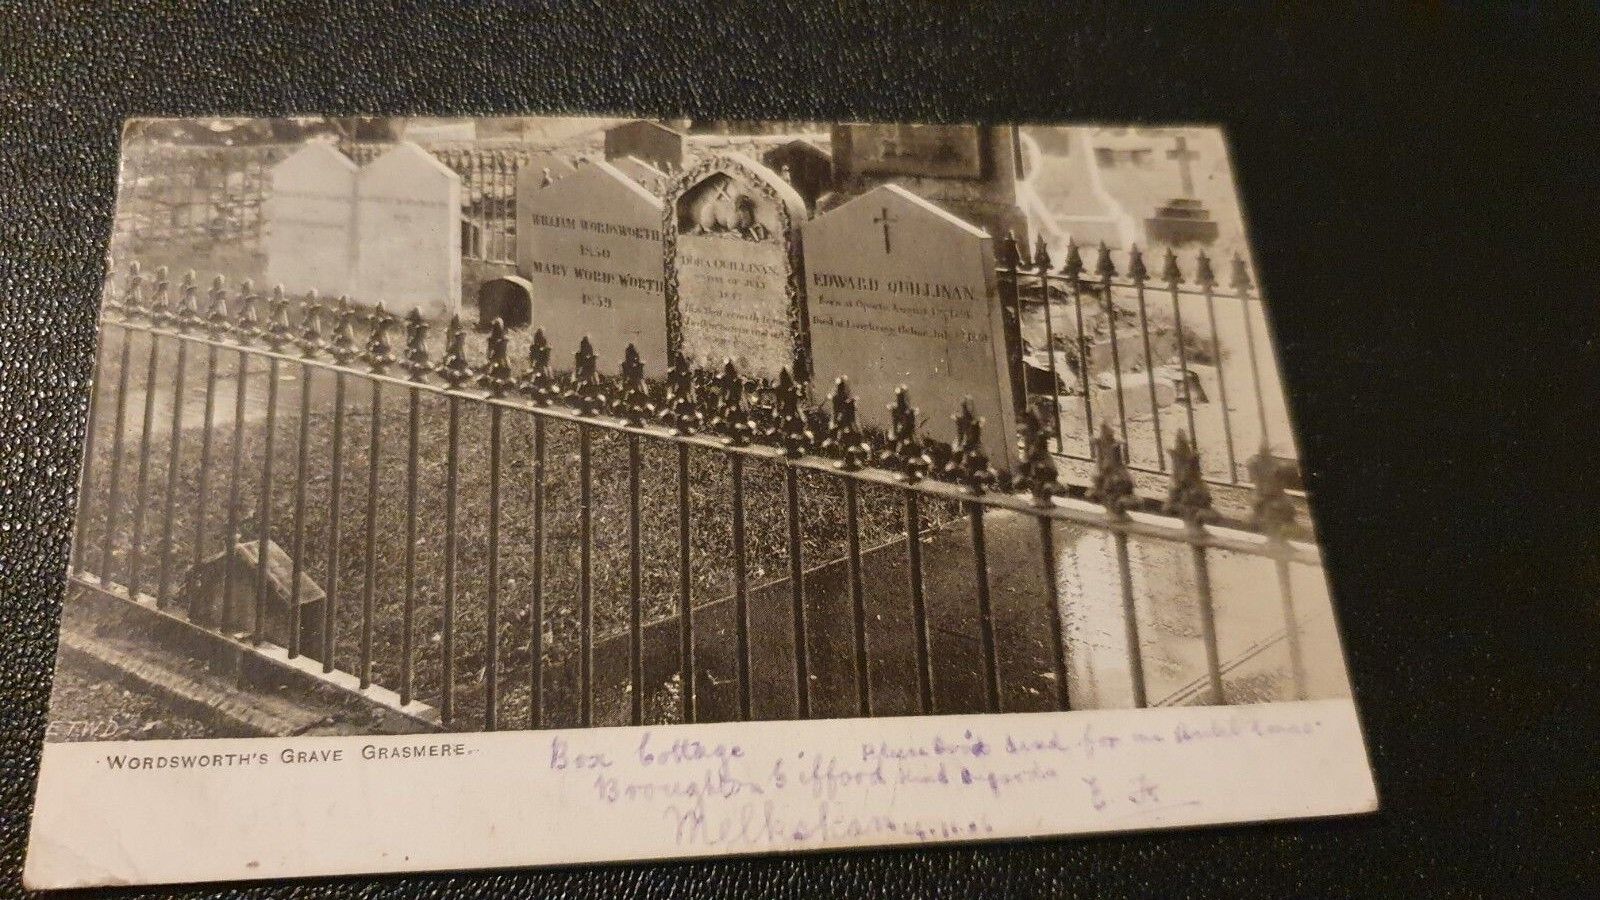 House Clearance - Edwardian Service, Wordsworth's Grave, Grasmere, Cumbria, 1906